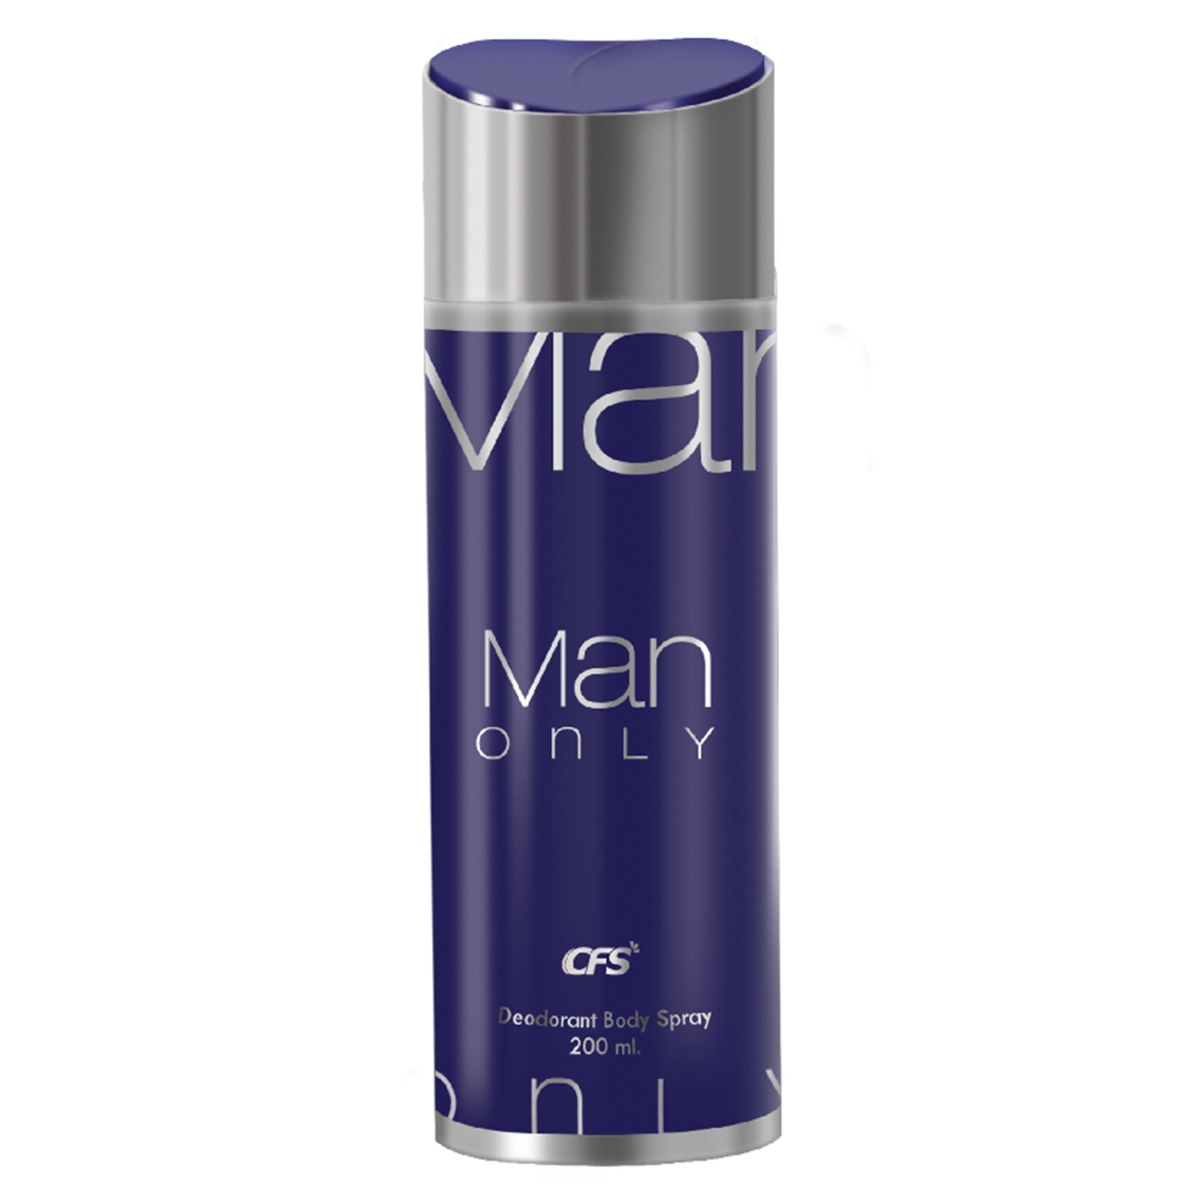 CFS Man Only Blue Long Lasting Best Deodorant Body Spray, 200ml